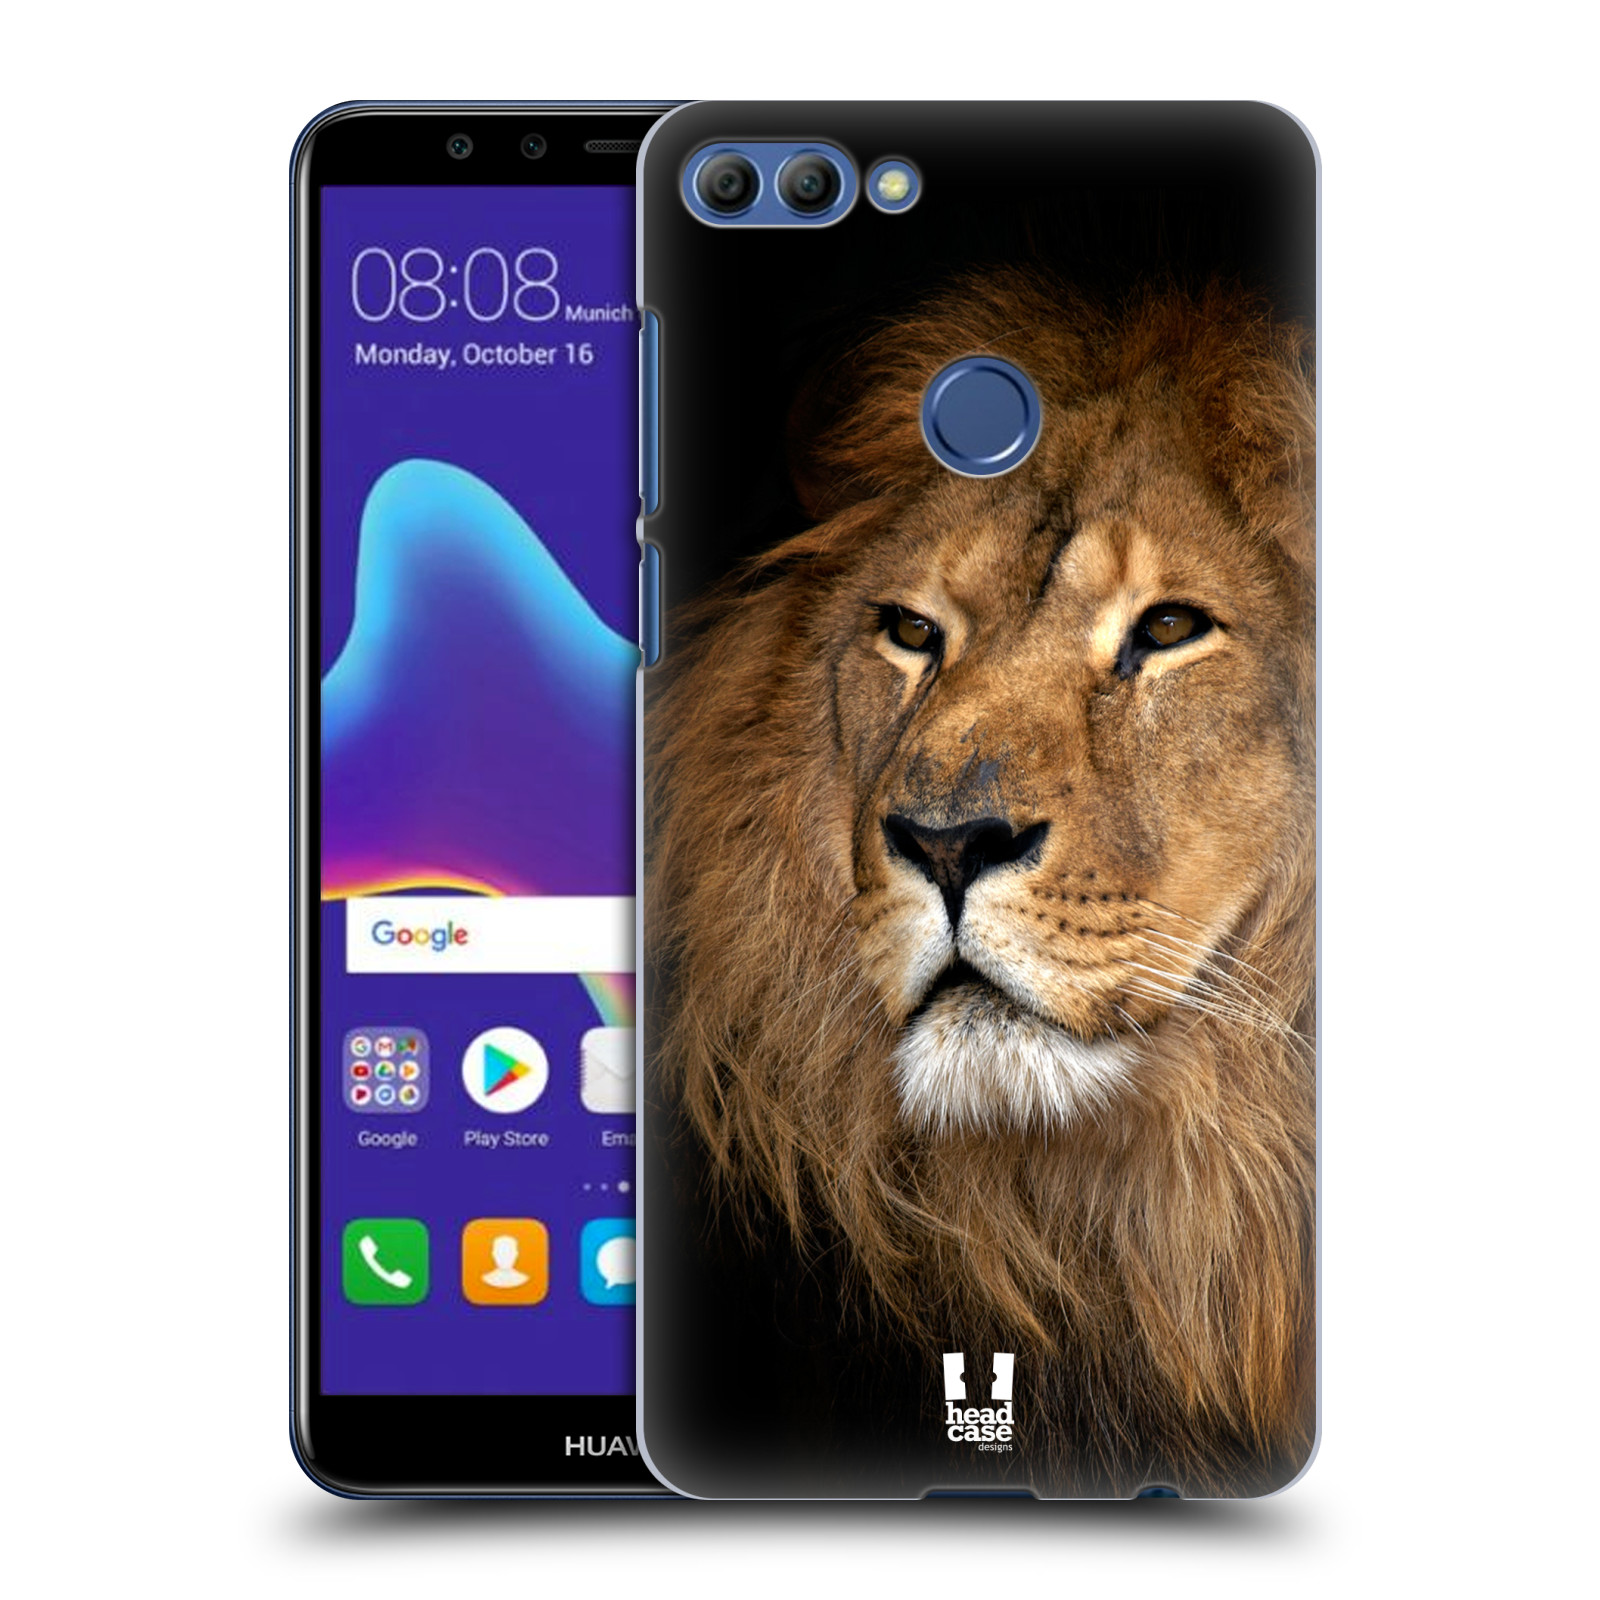 HEAD CASE plastový obal na mobil Huawei Y9 2018 vzor Divočina, Divoký život a zvířata foto LEV KRÁL ZVÍŘAT